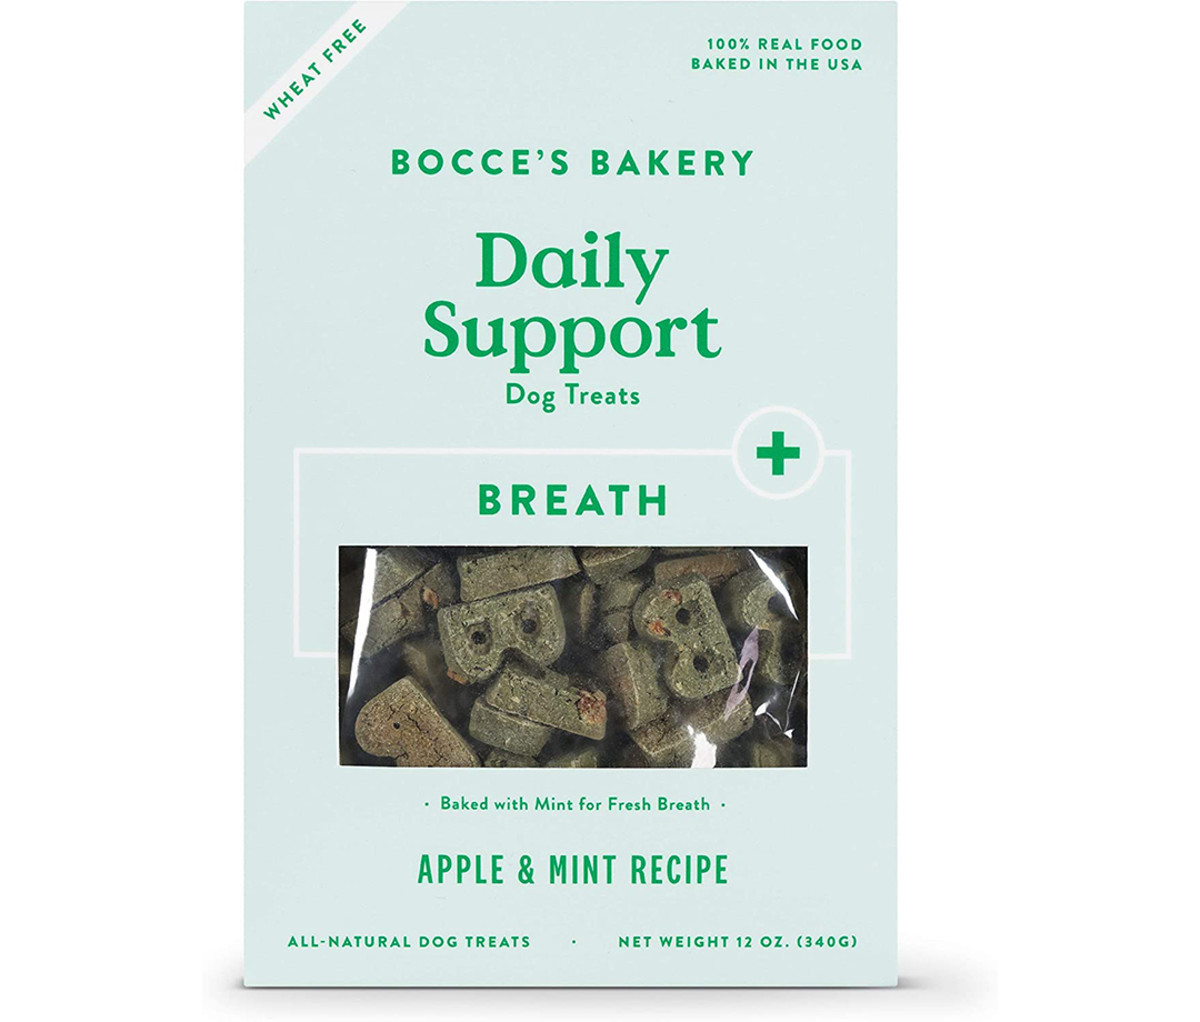 Bocce’s Bakery Breath Daily Support Treats